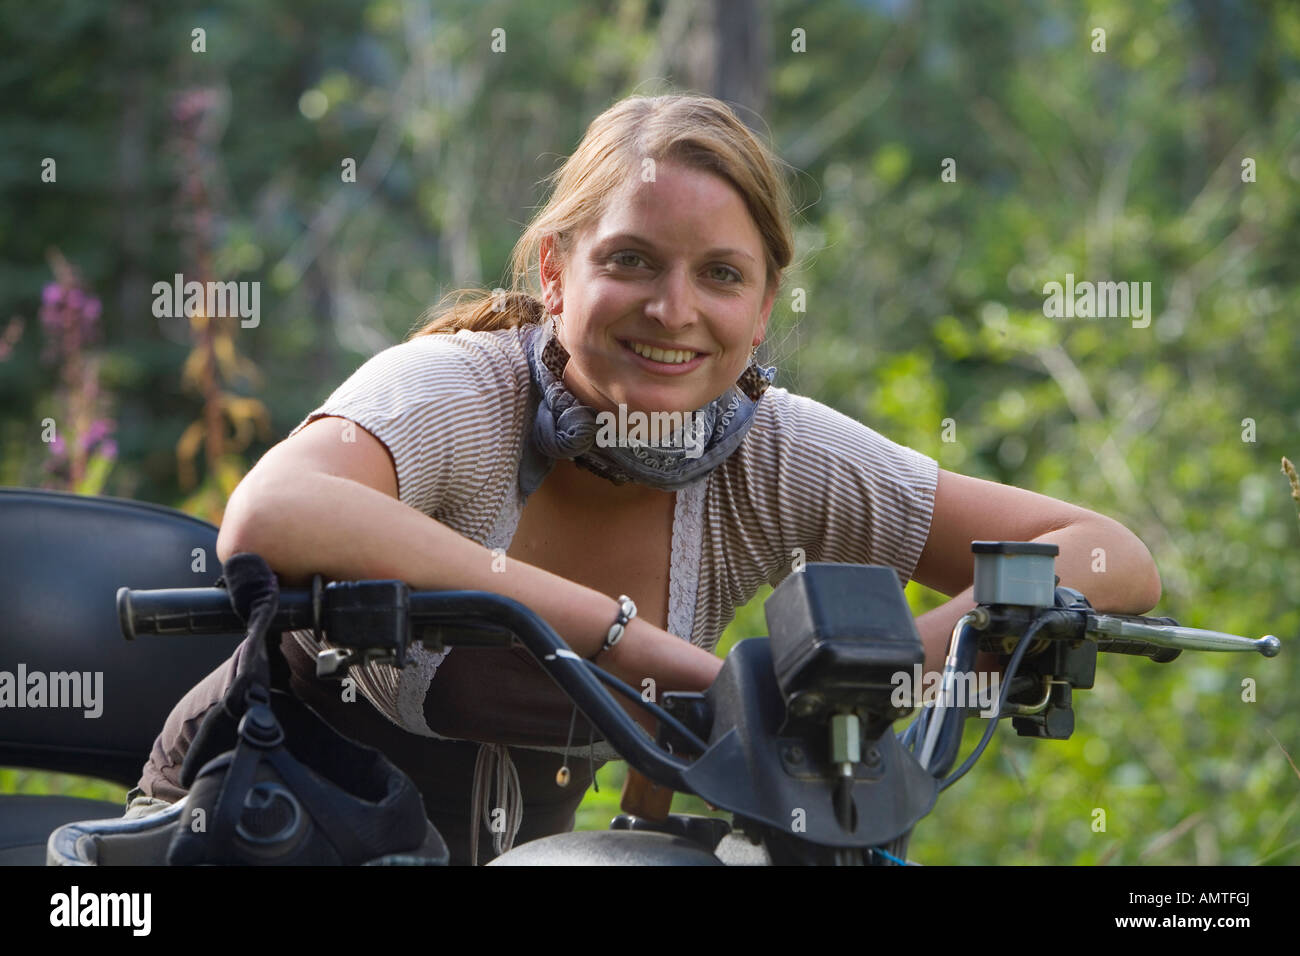 woman riding an all terrain vehicle Stock Photo